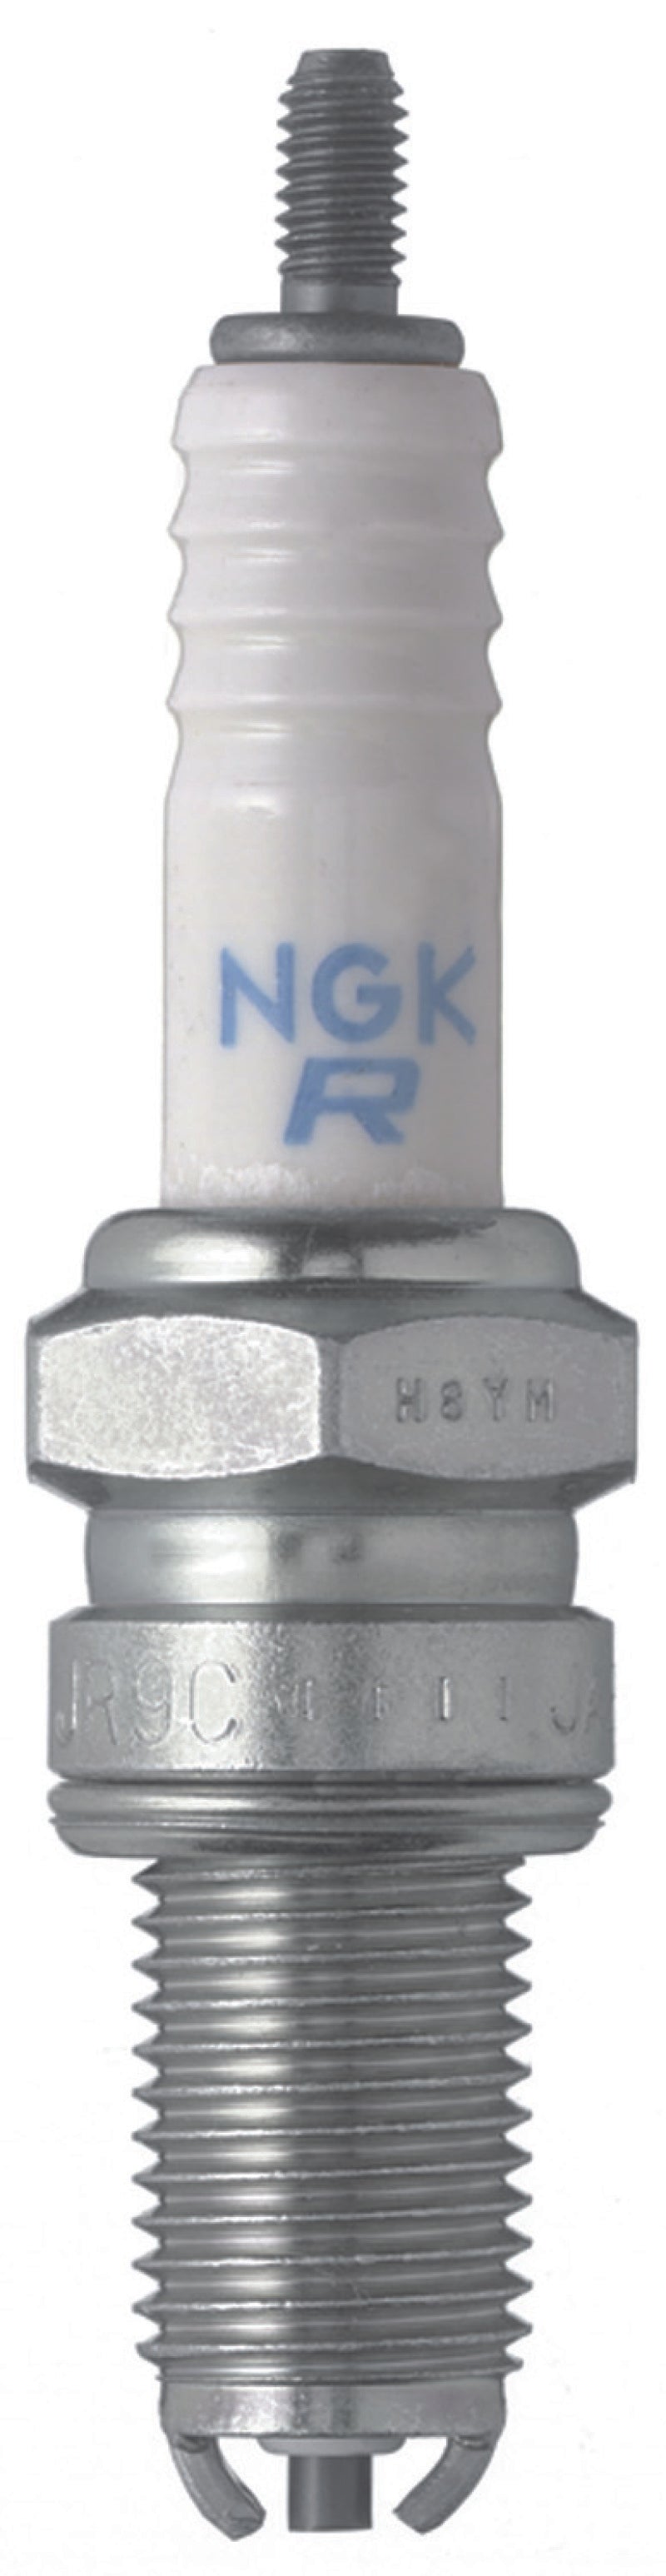 NGK Standard Spark Plug Box of 10 (JR8C) -  Shop now at Performance Car Parts